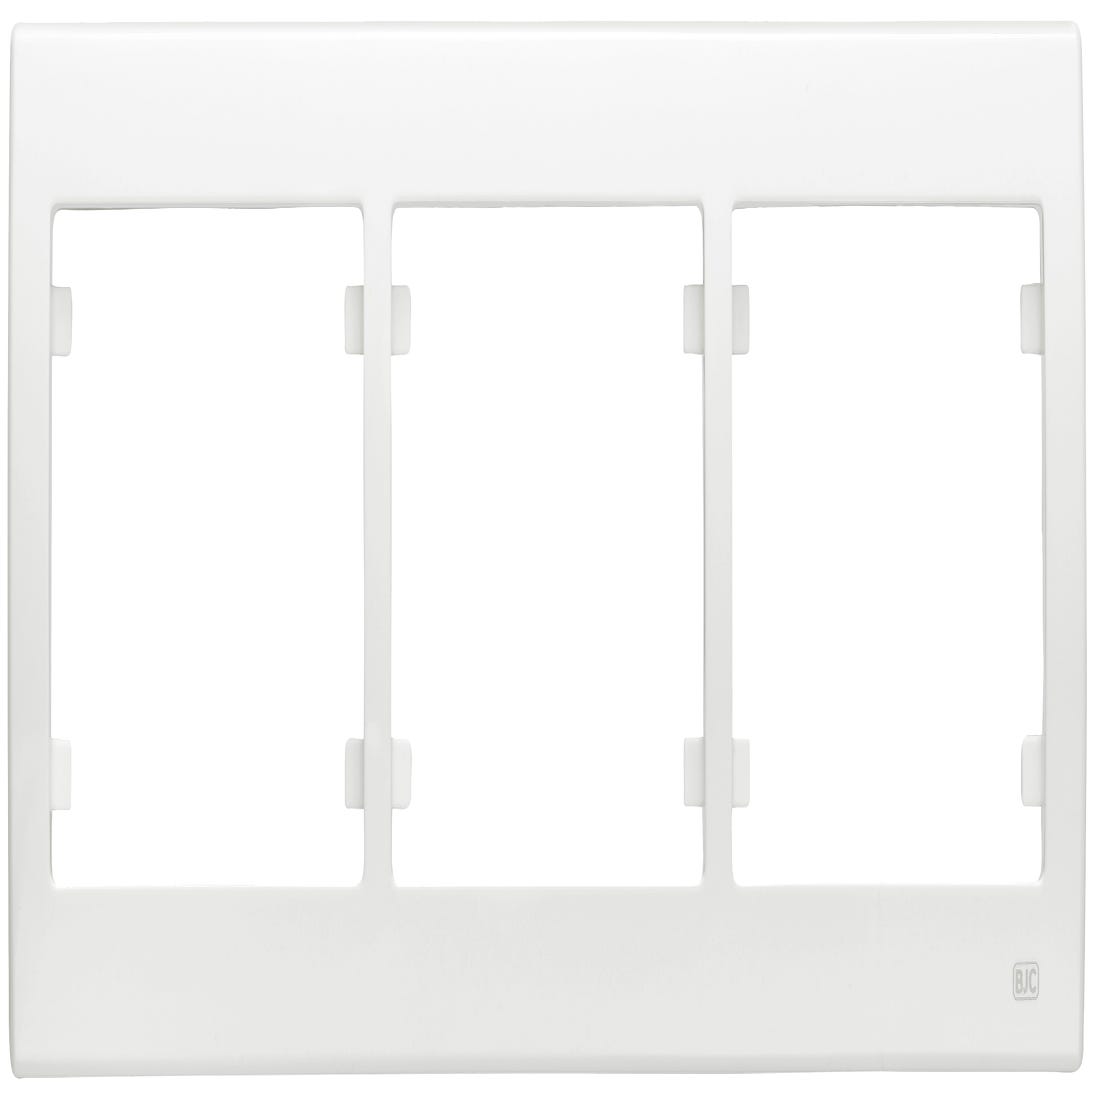 Marco embellecedor color blanco para 4 interruptores Serie Viva de BJC